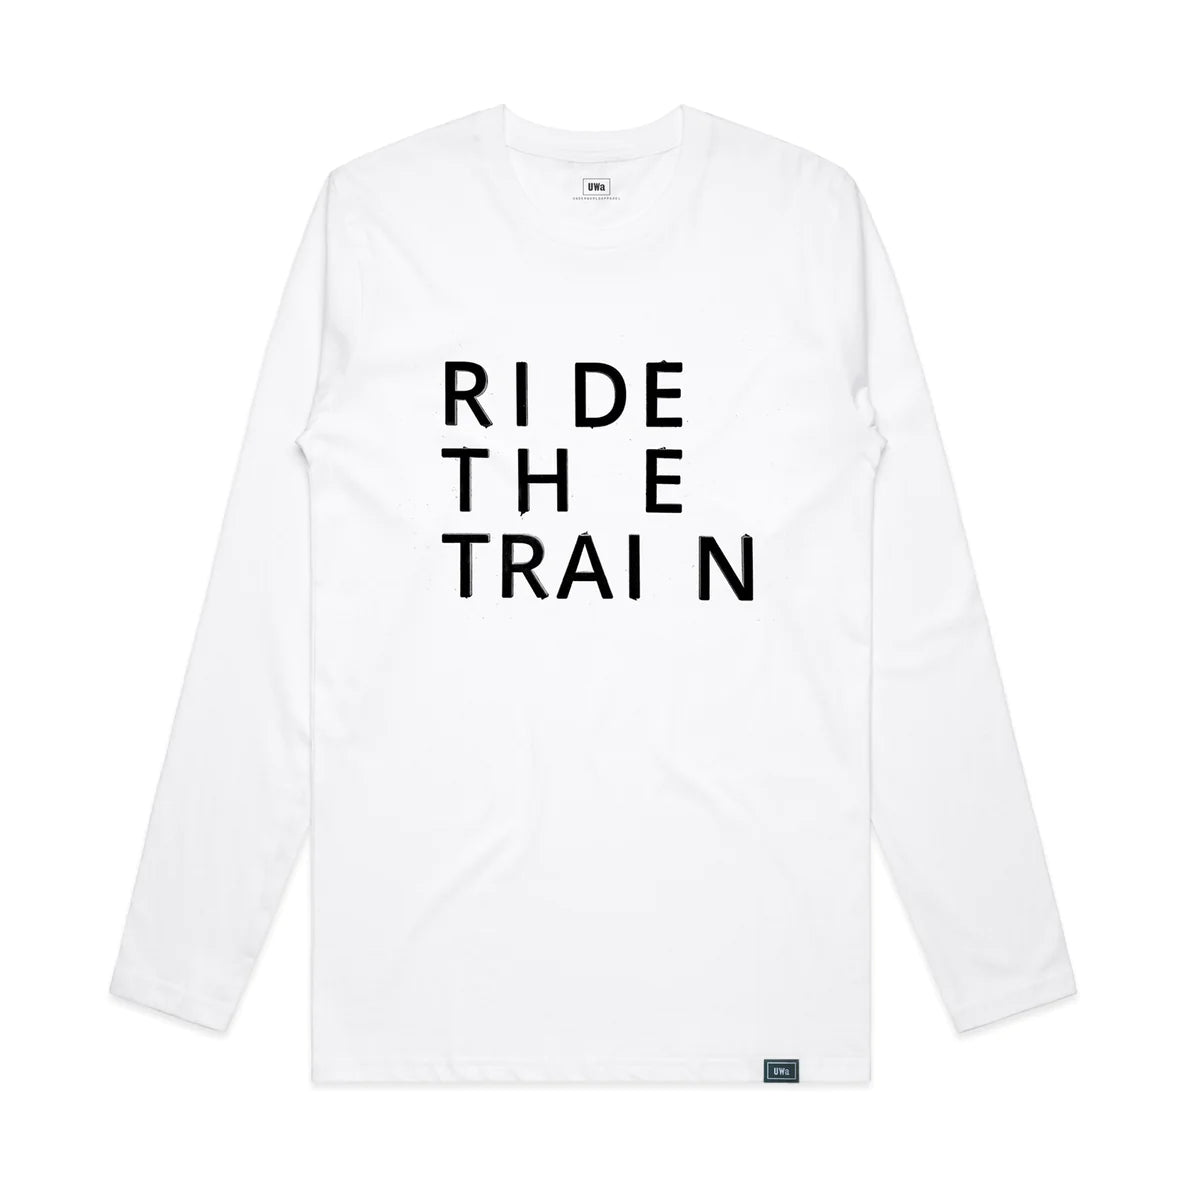 Underworld - *Dark & Long (Dark Train)* Ride The Train Long Sleeved T-Shirt (White)